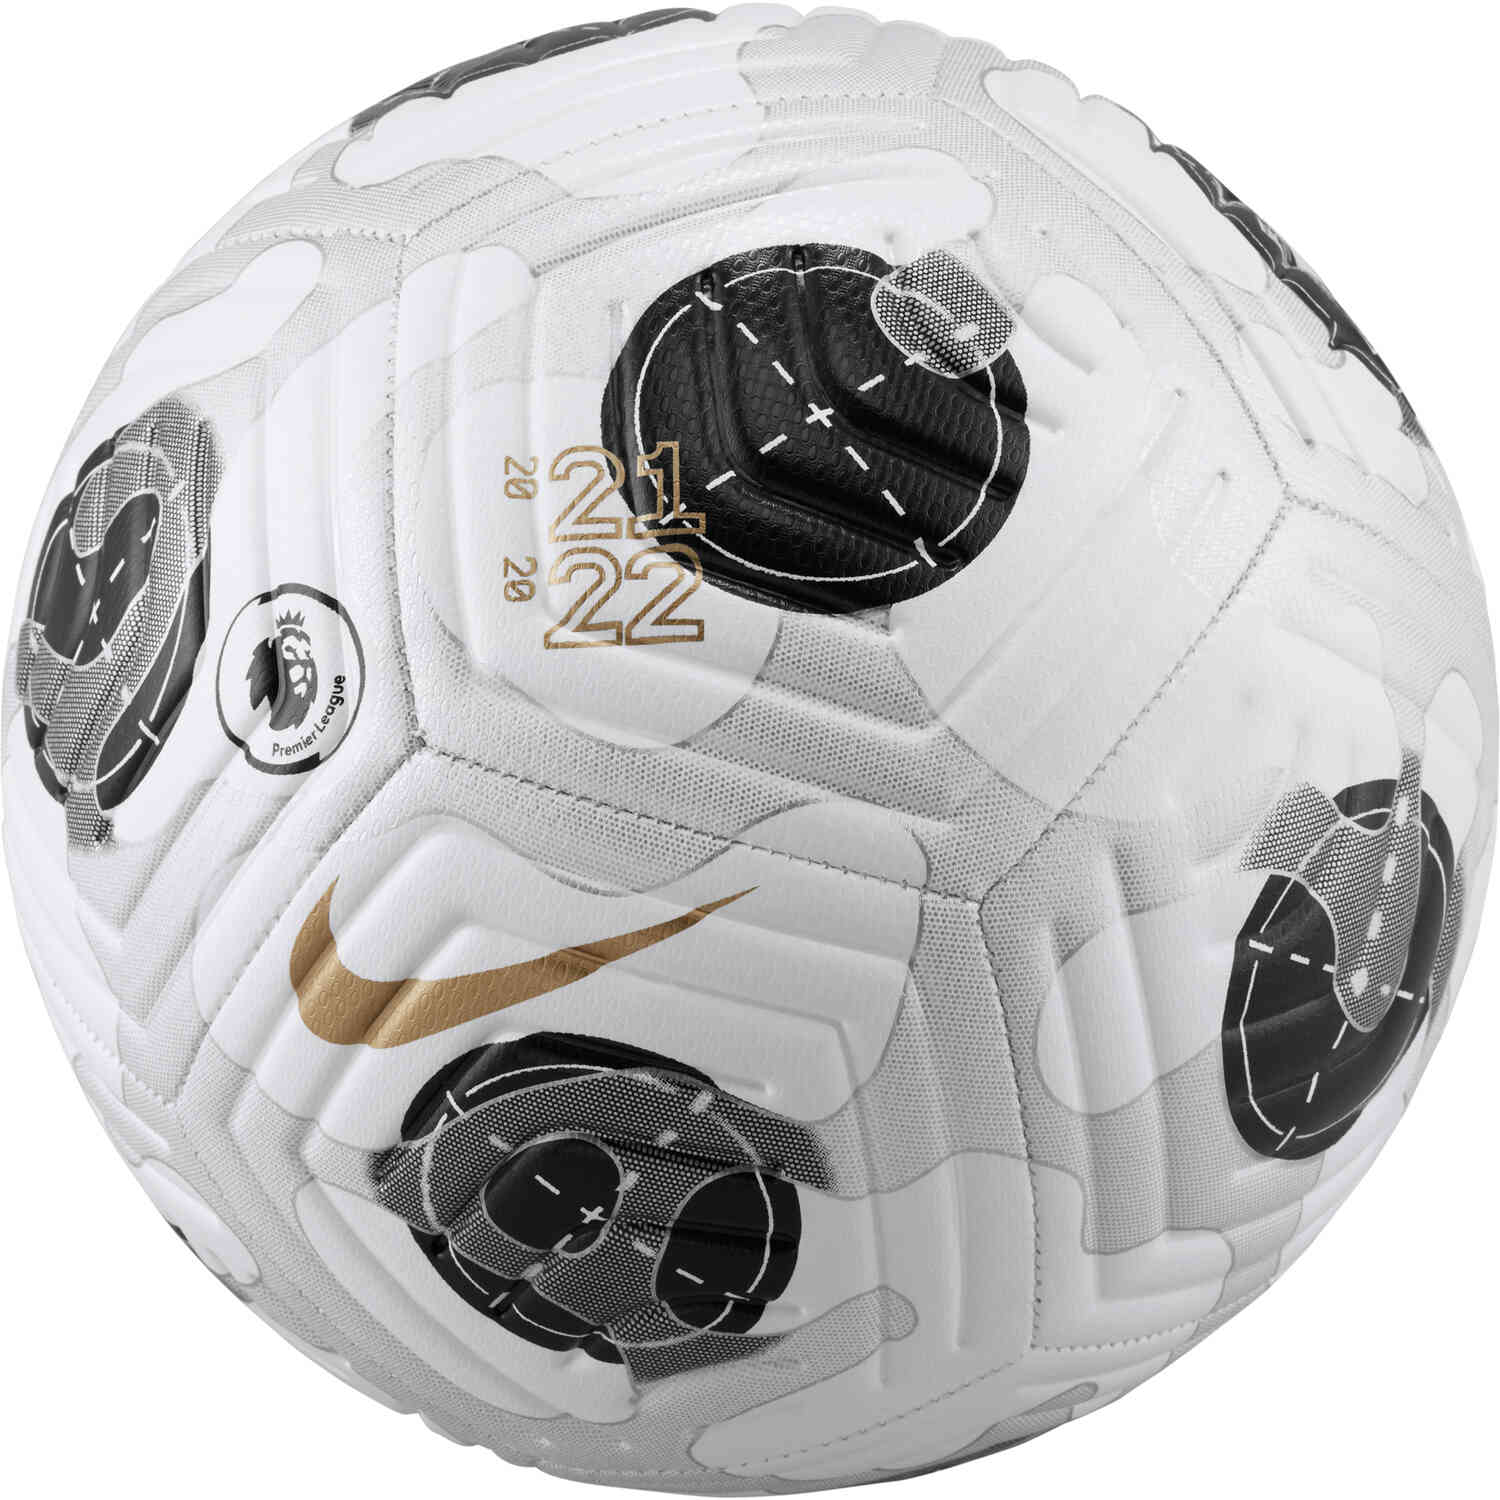 Nike Strike Soccer Ball Clearance Deals, Save 45% | jlcatj.gob.mx